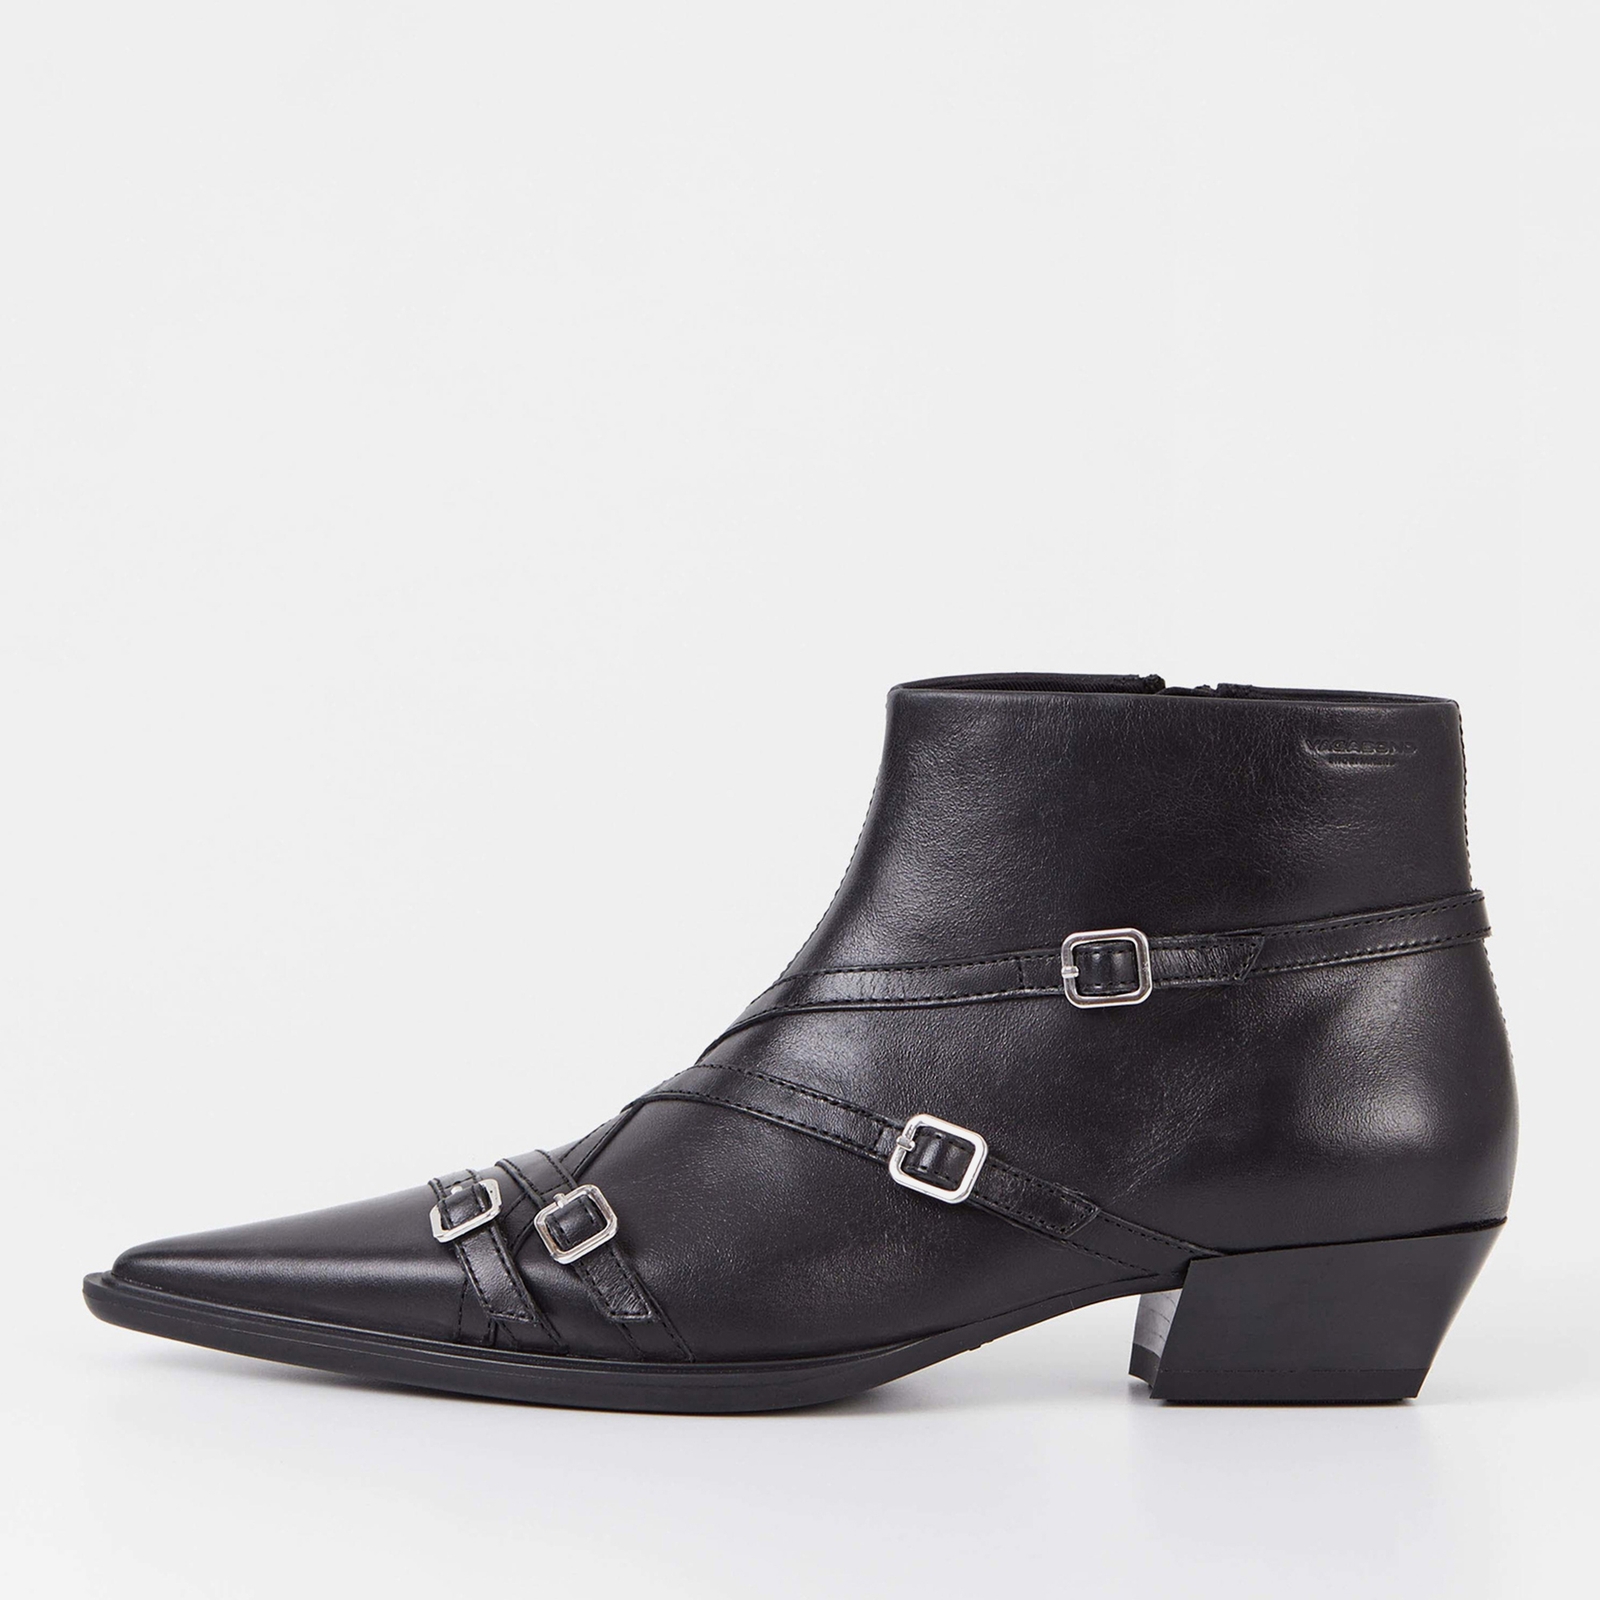 Vagabond Women’s Cassie Leather Ankle Boots